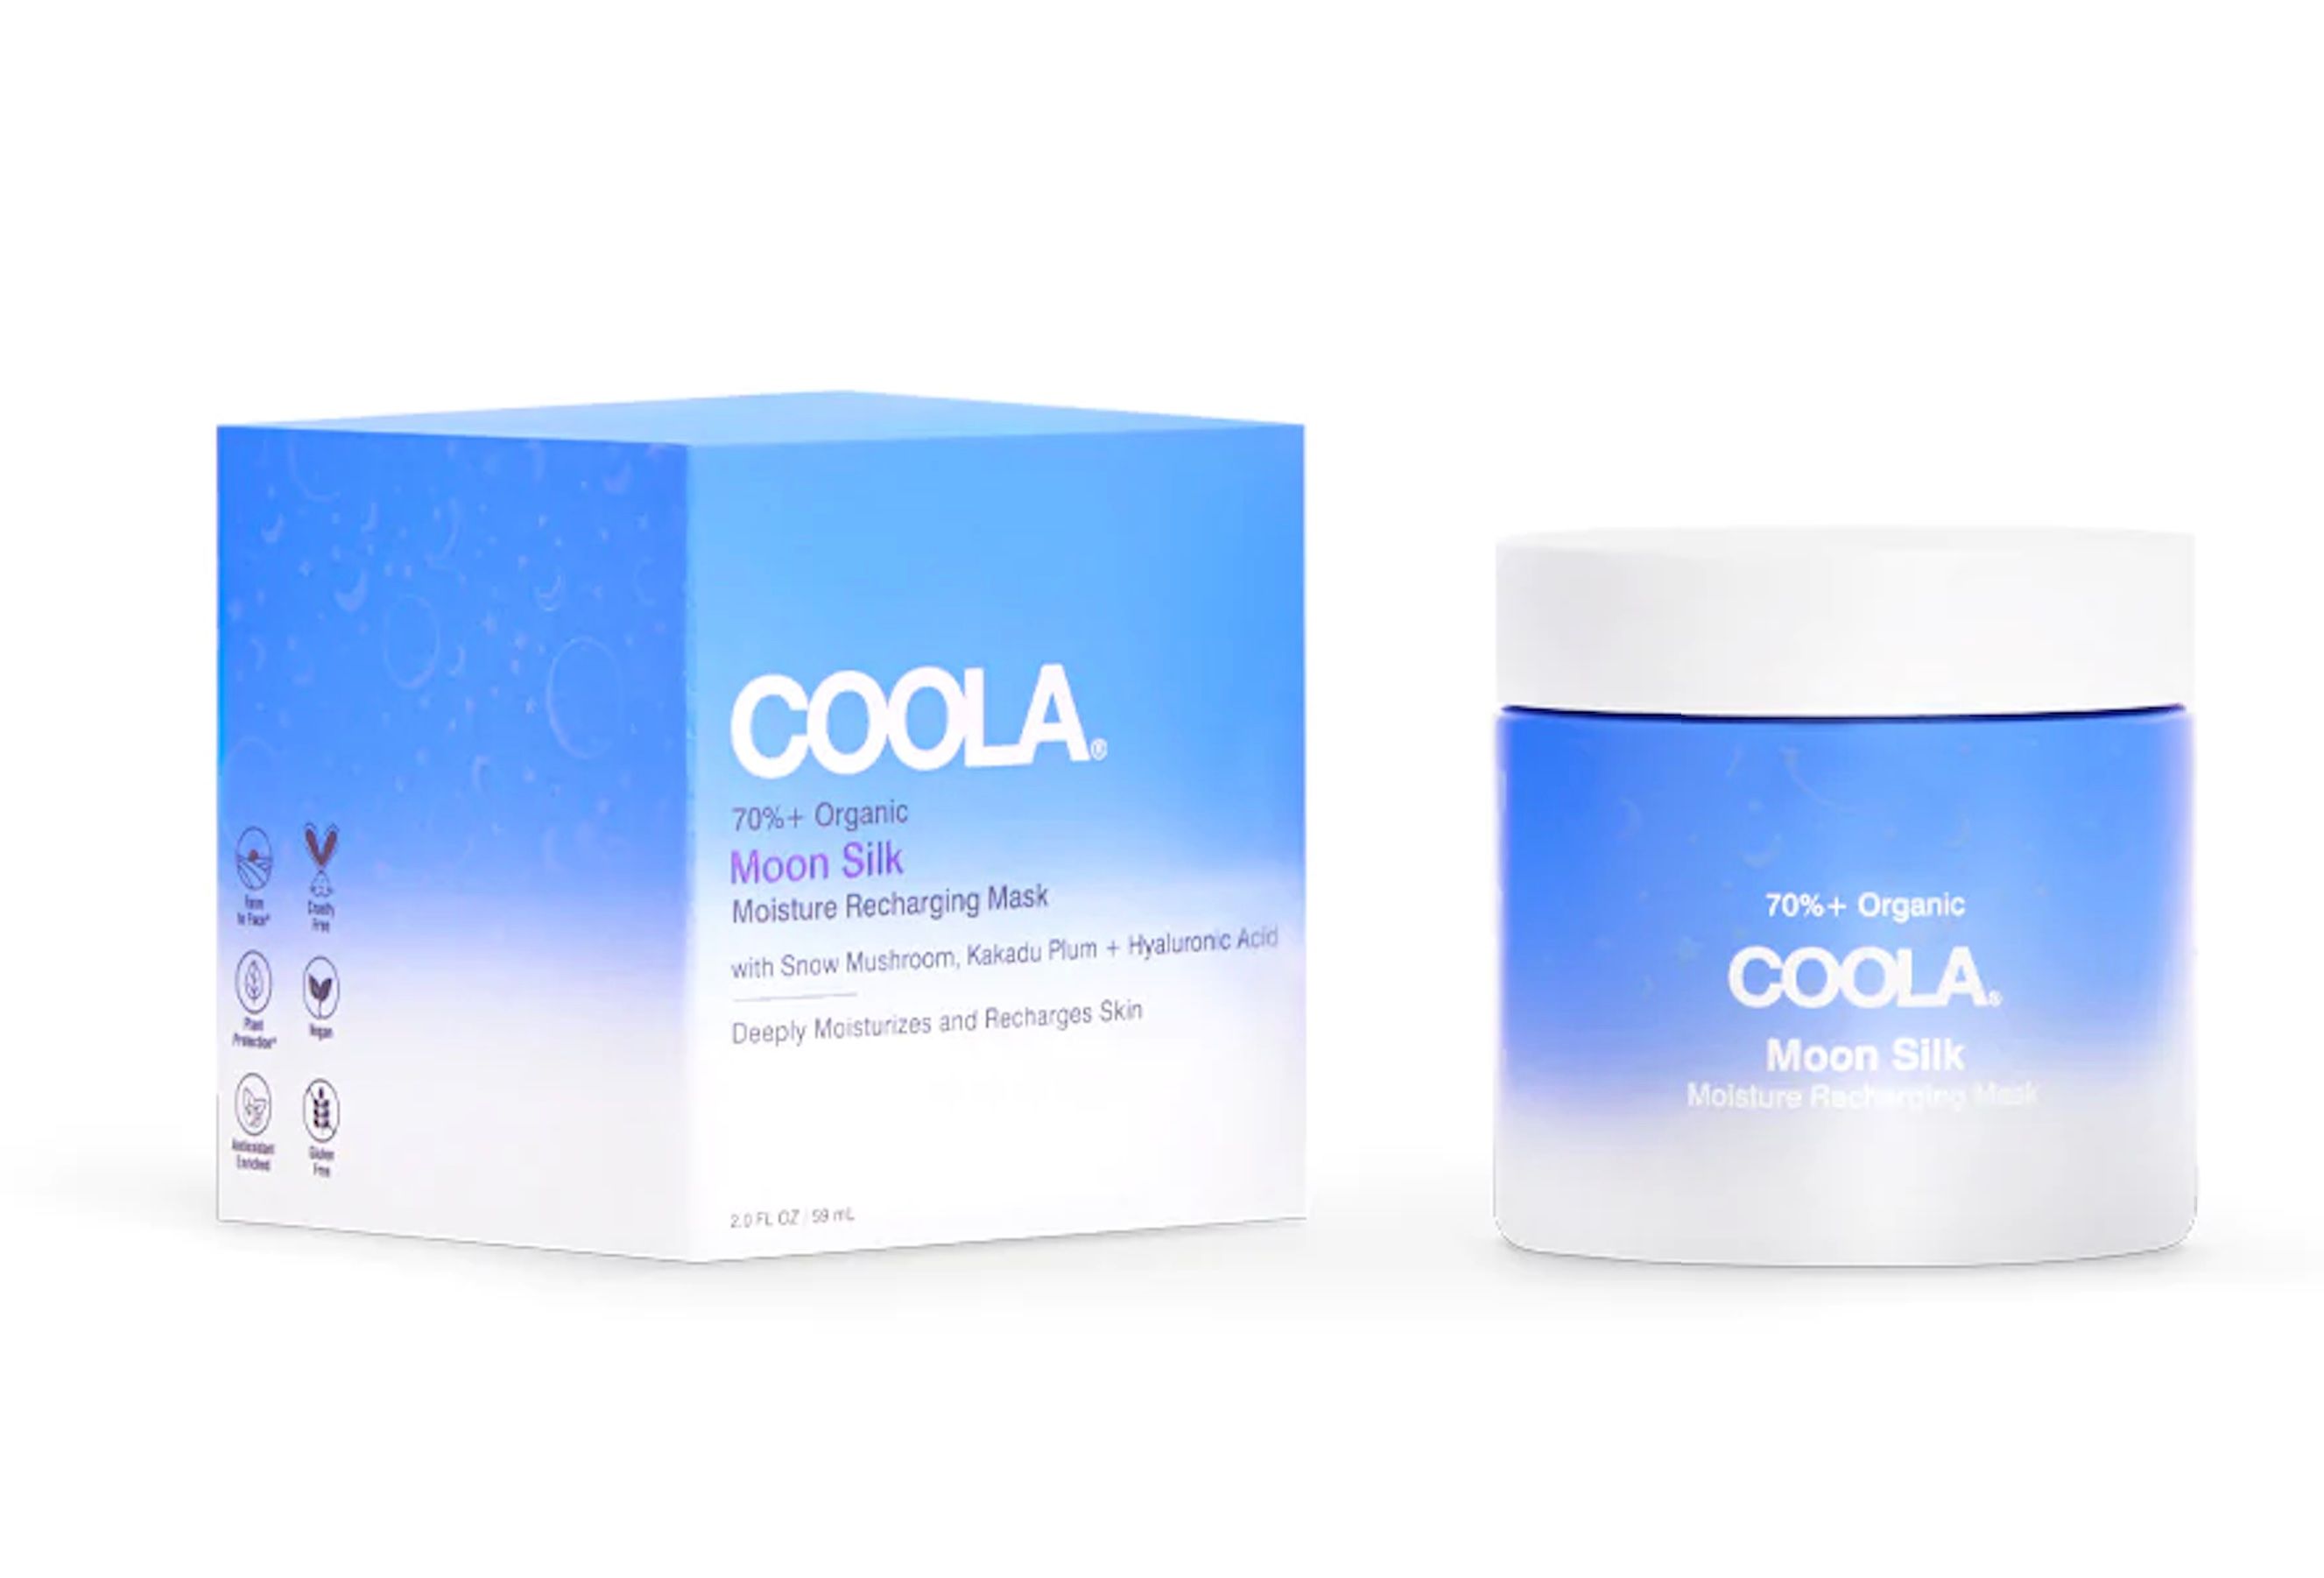 COOLA Organic Moon Silk Recharging Face Mask - 2 fl oz